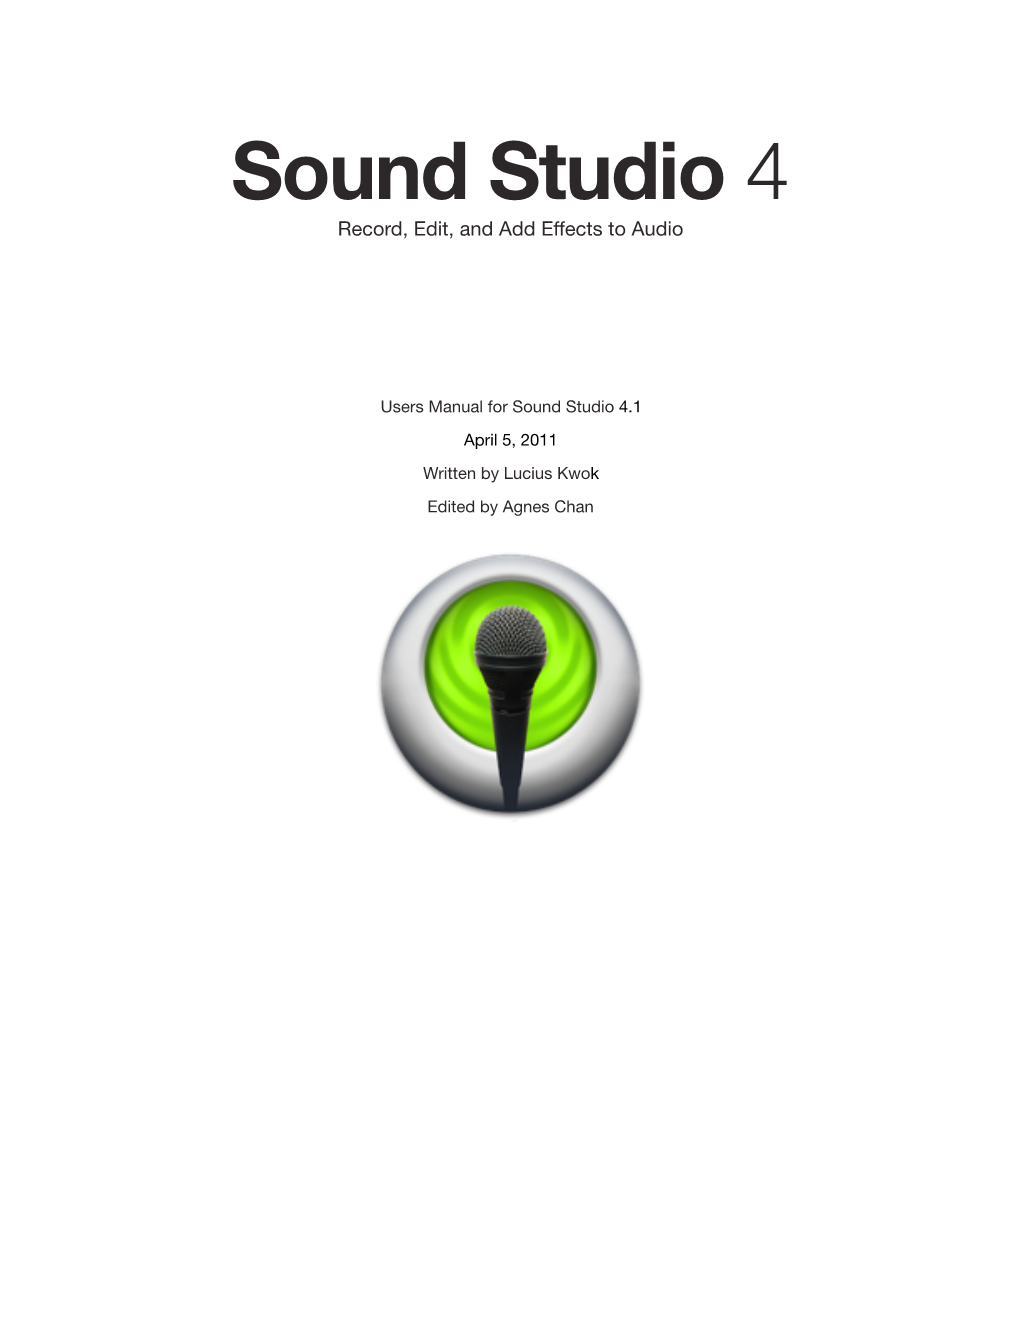 Sound Studio 4 Manual Copyright © 2011 Felt Tip Inc